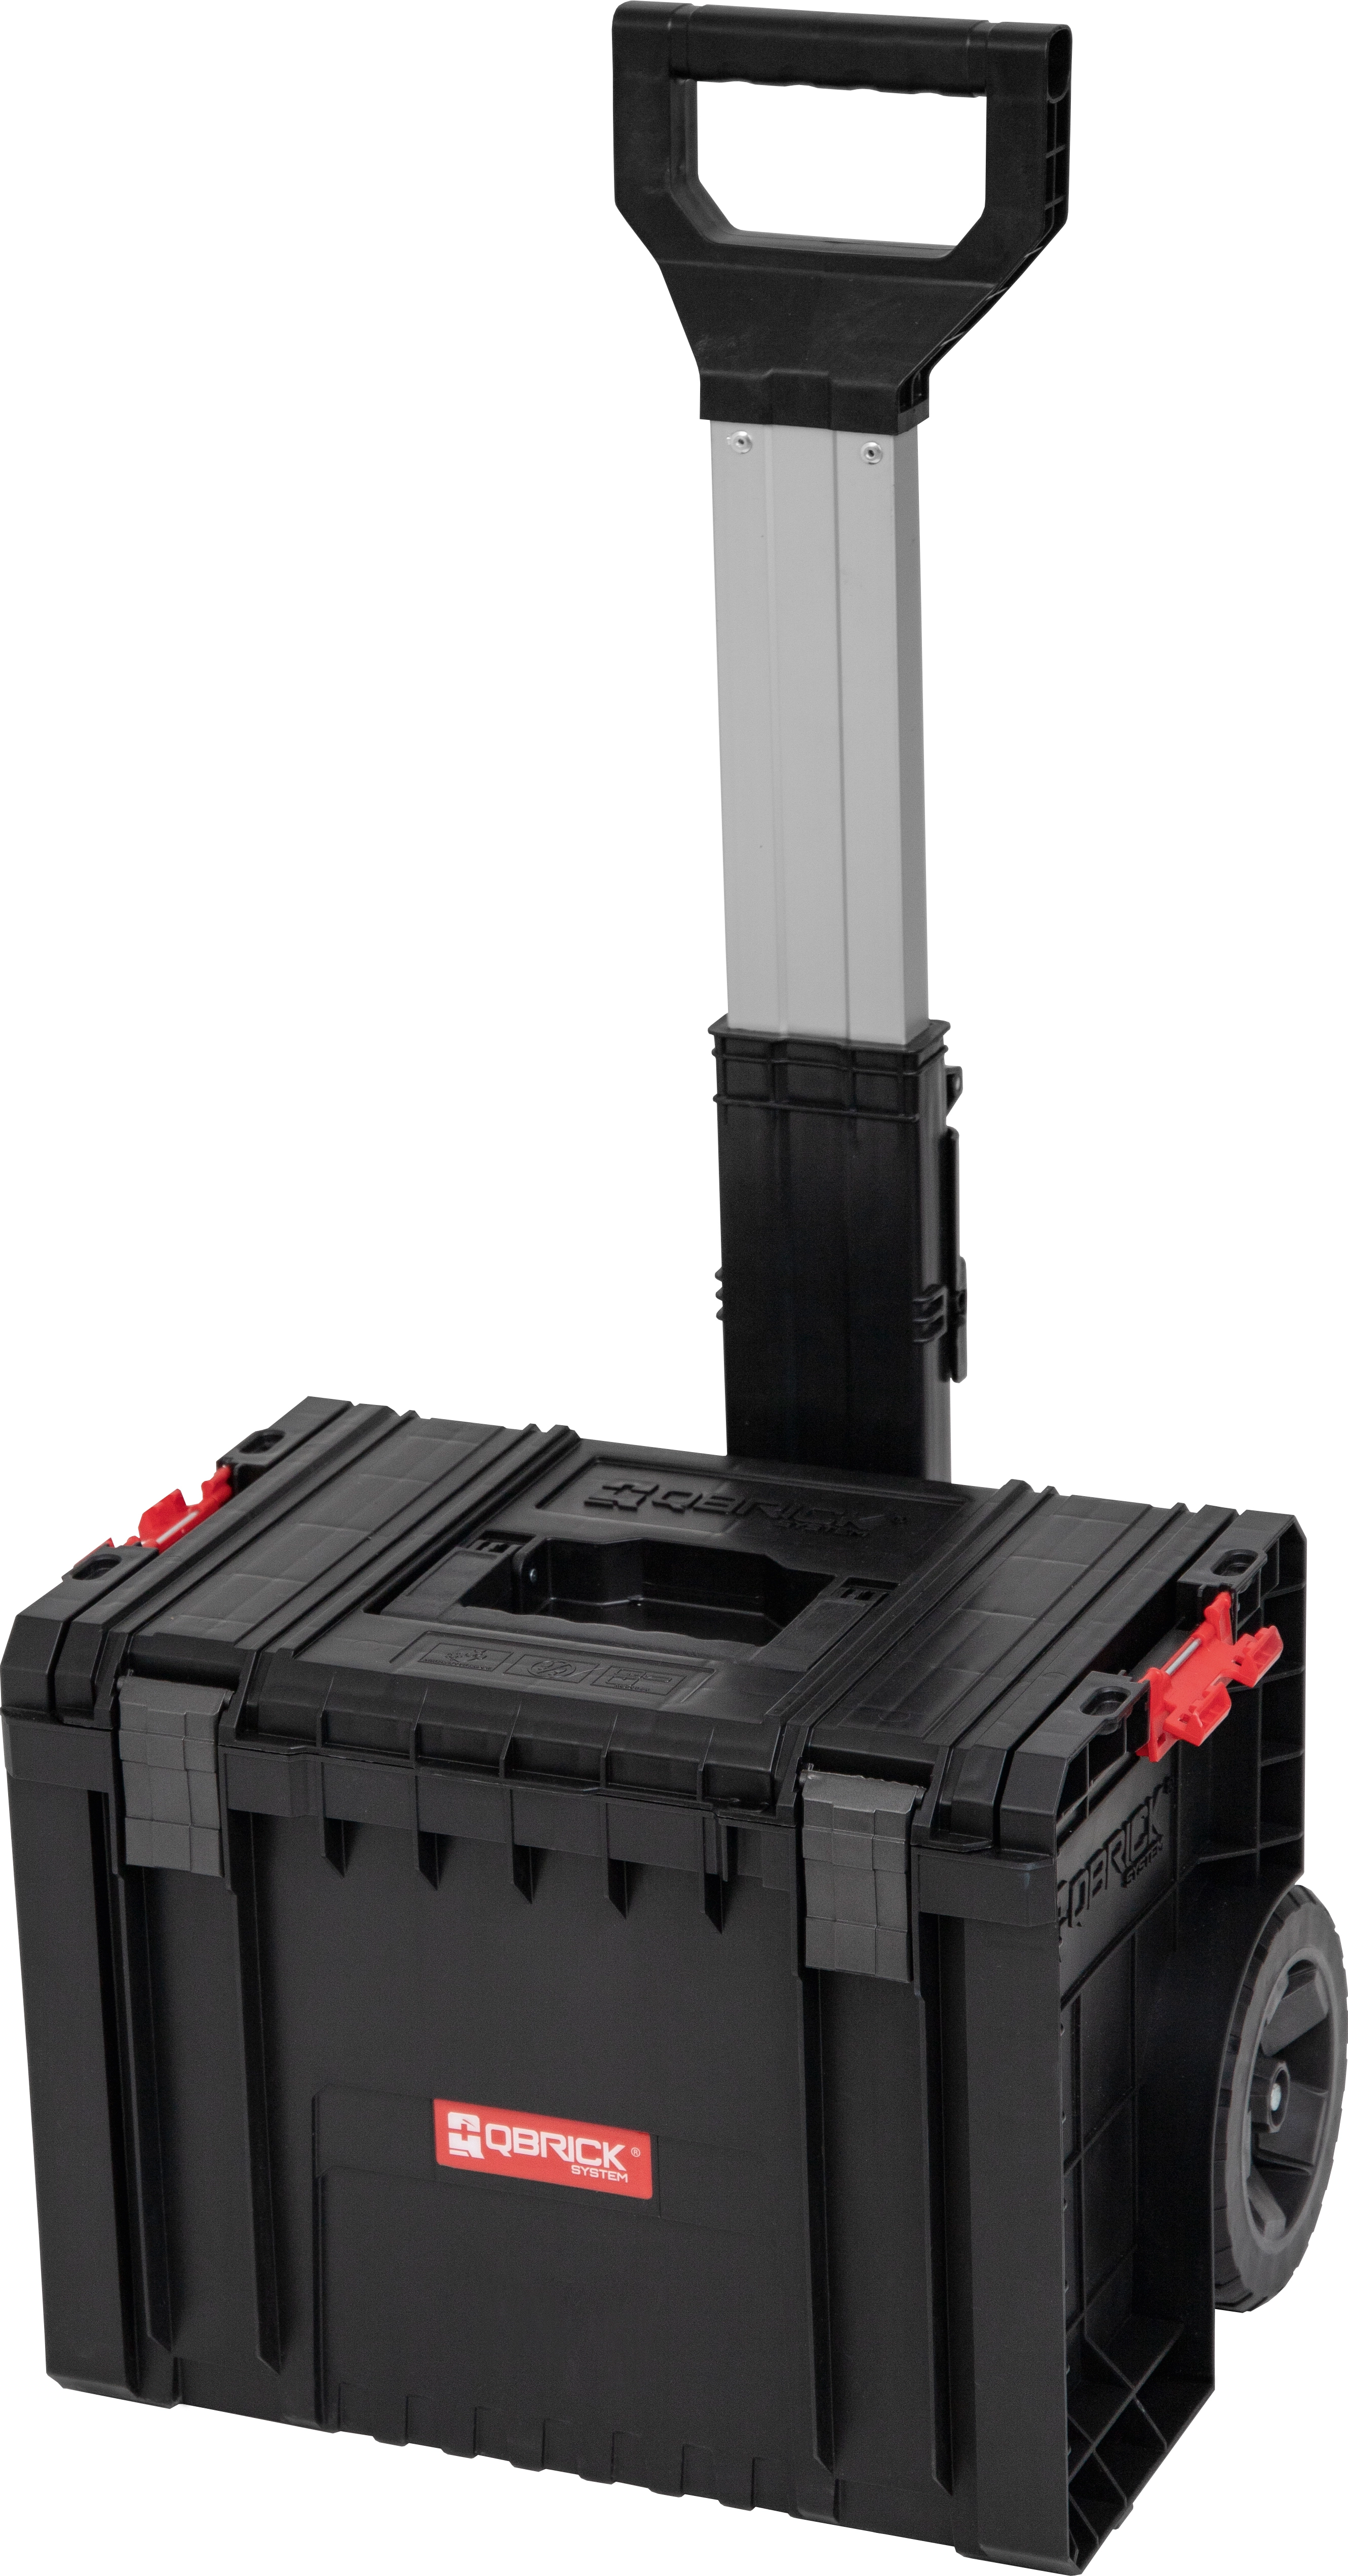 Werkzeugbox Cart OBI x cm System Qbrick 45 Pro bei x cm cm kaufen 39 69